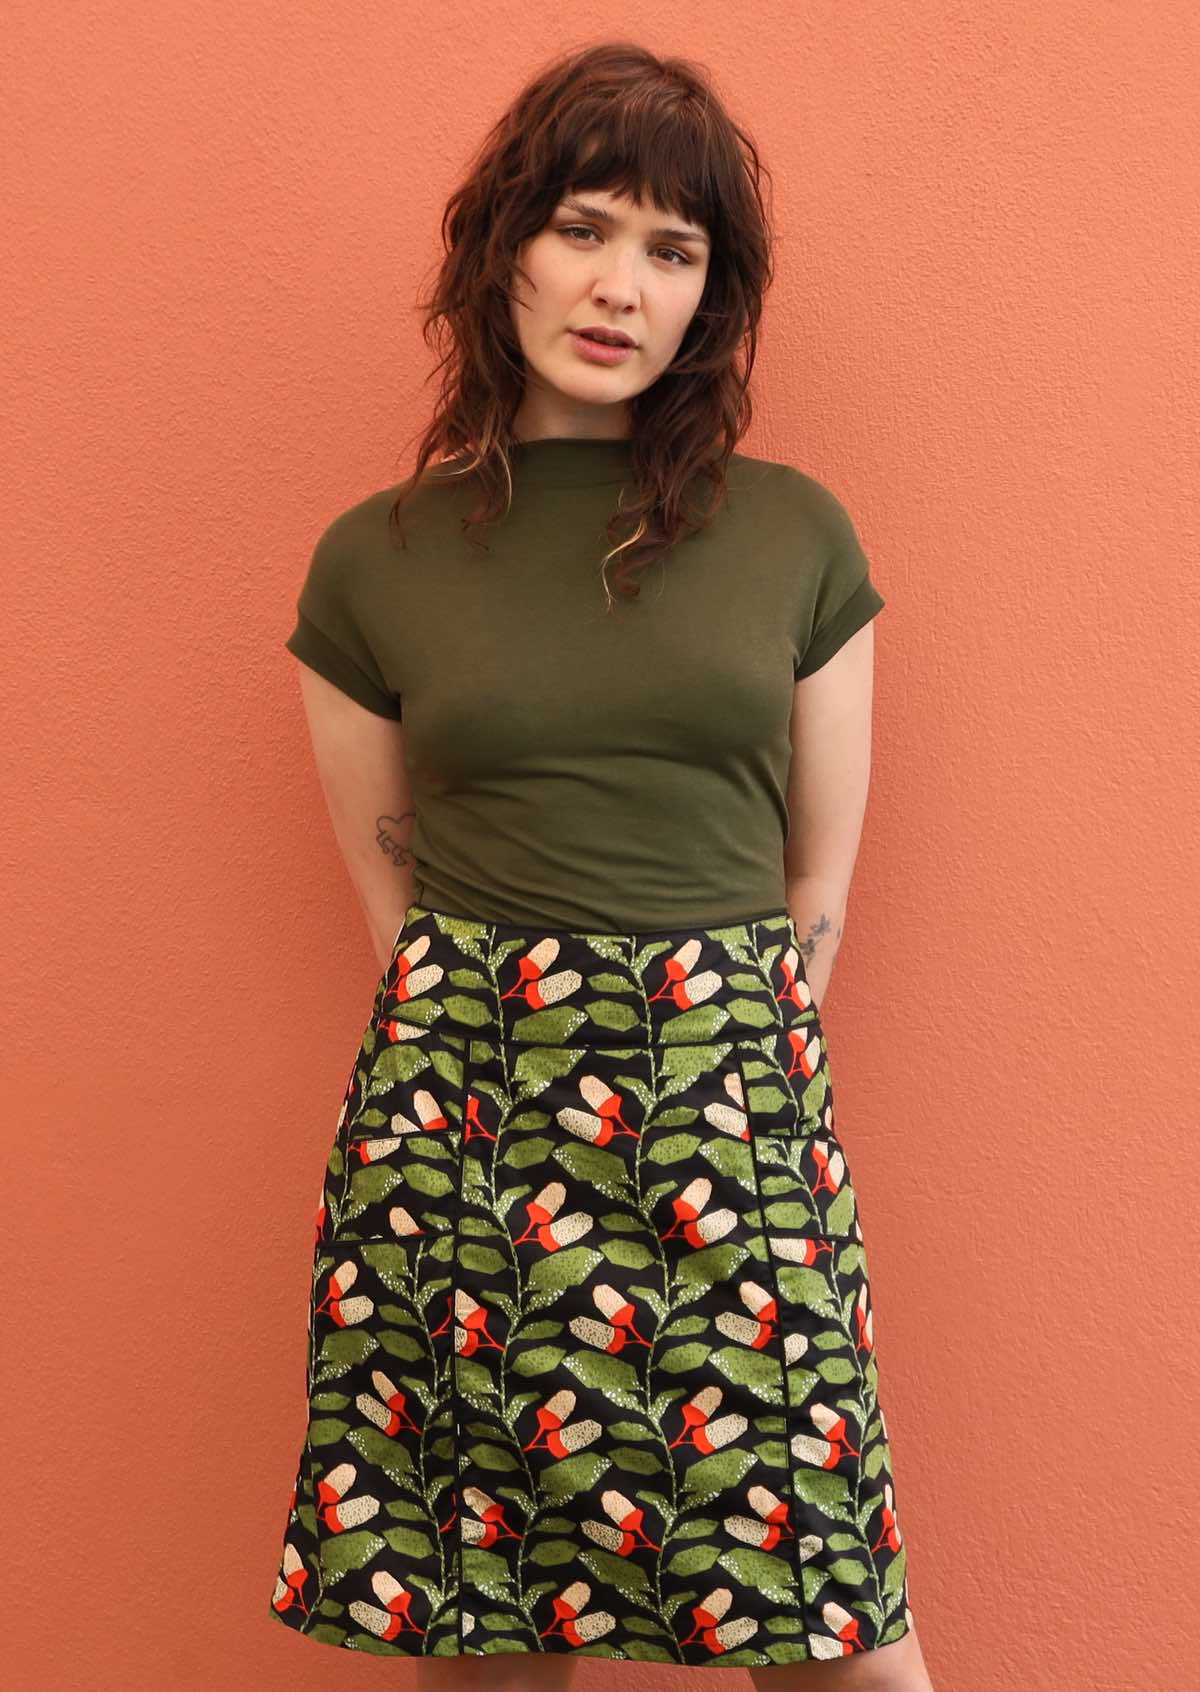 Model wears Aalia Skirt Oak green, orange and white speckled botanical print on black base 100% cotton, knee length A-line skirt with side zip and pockets | Karma East